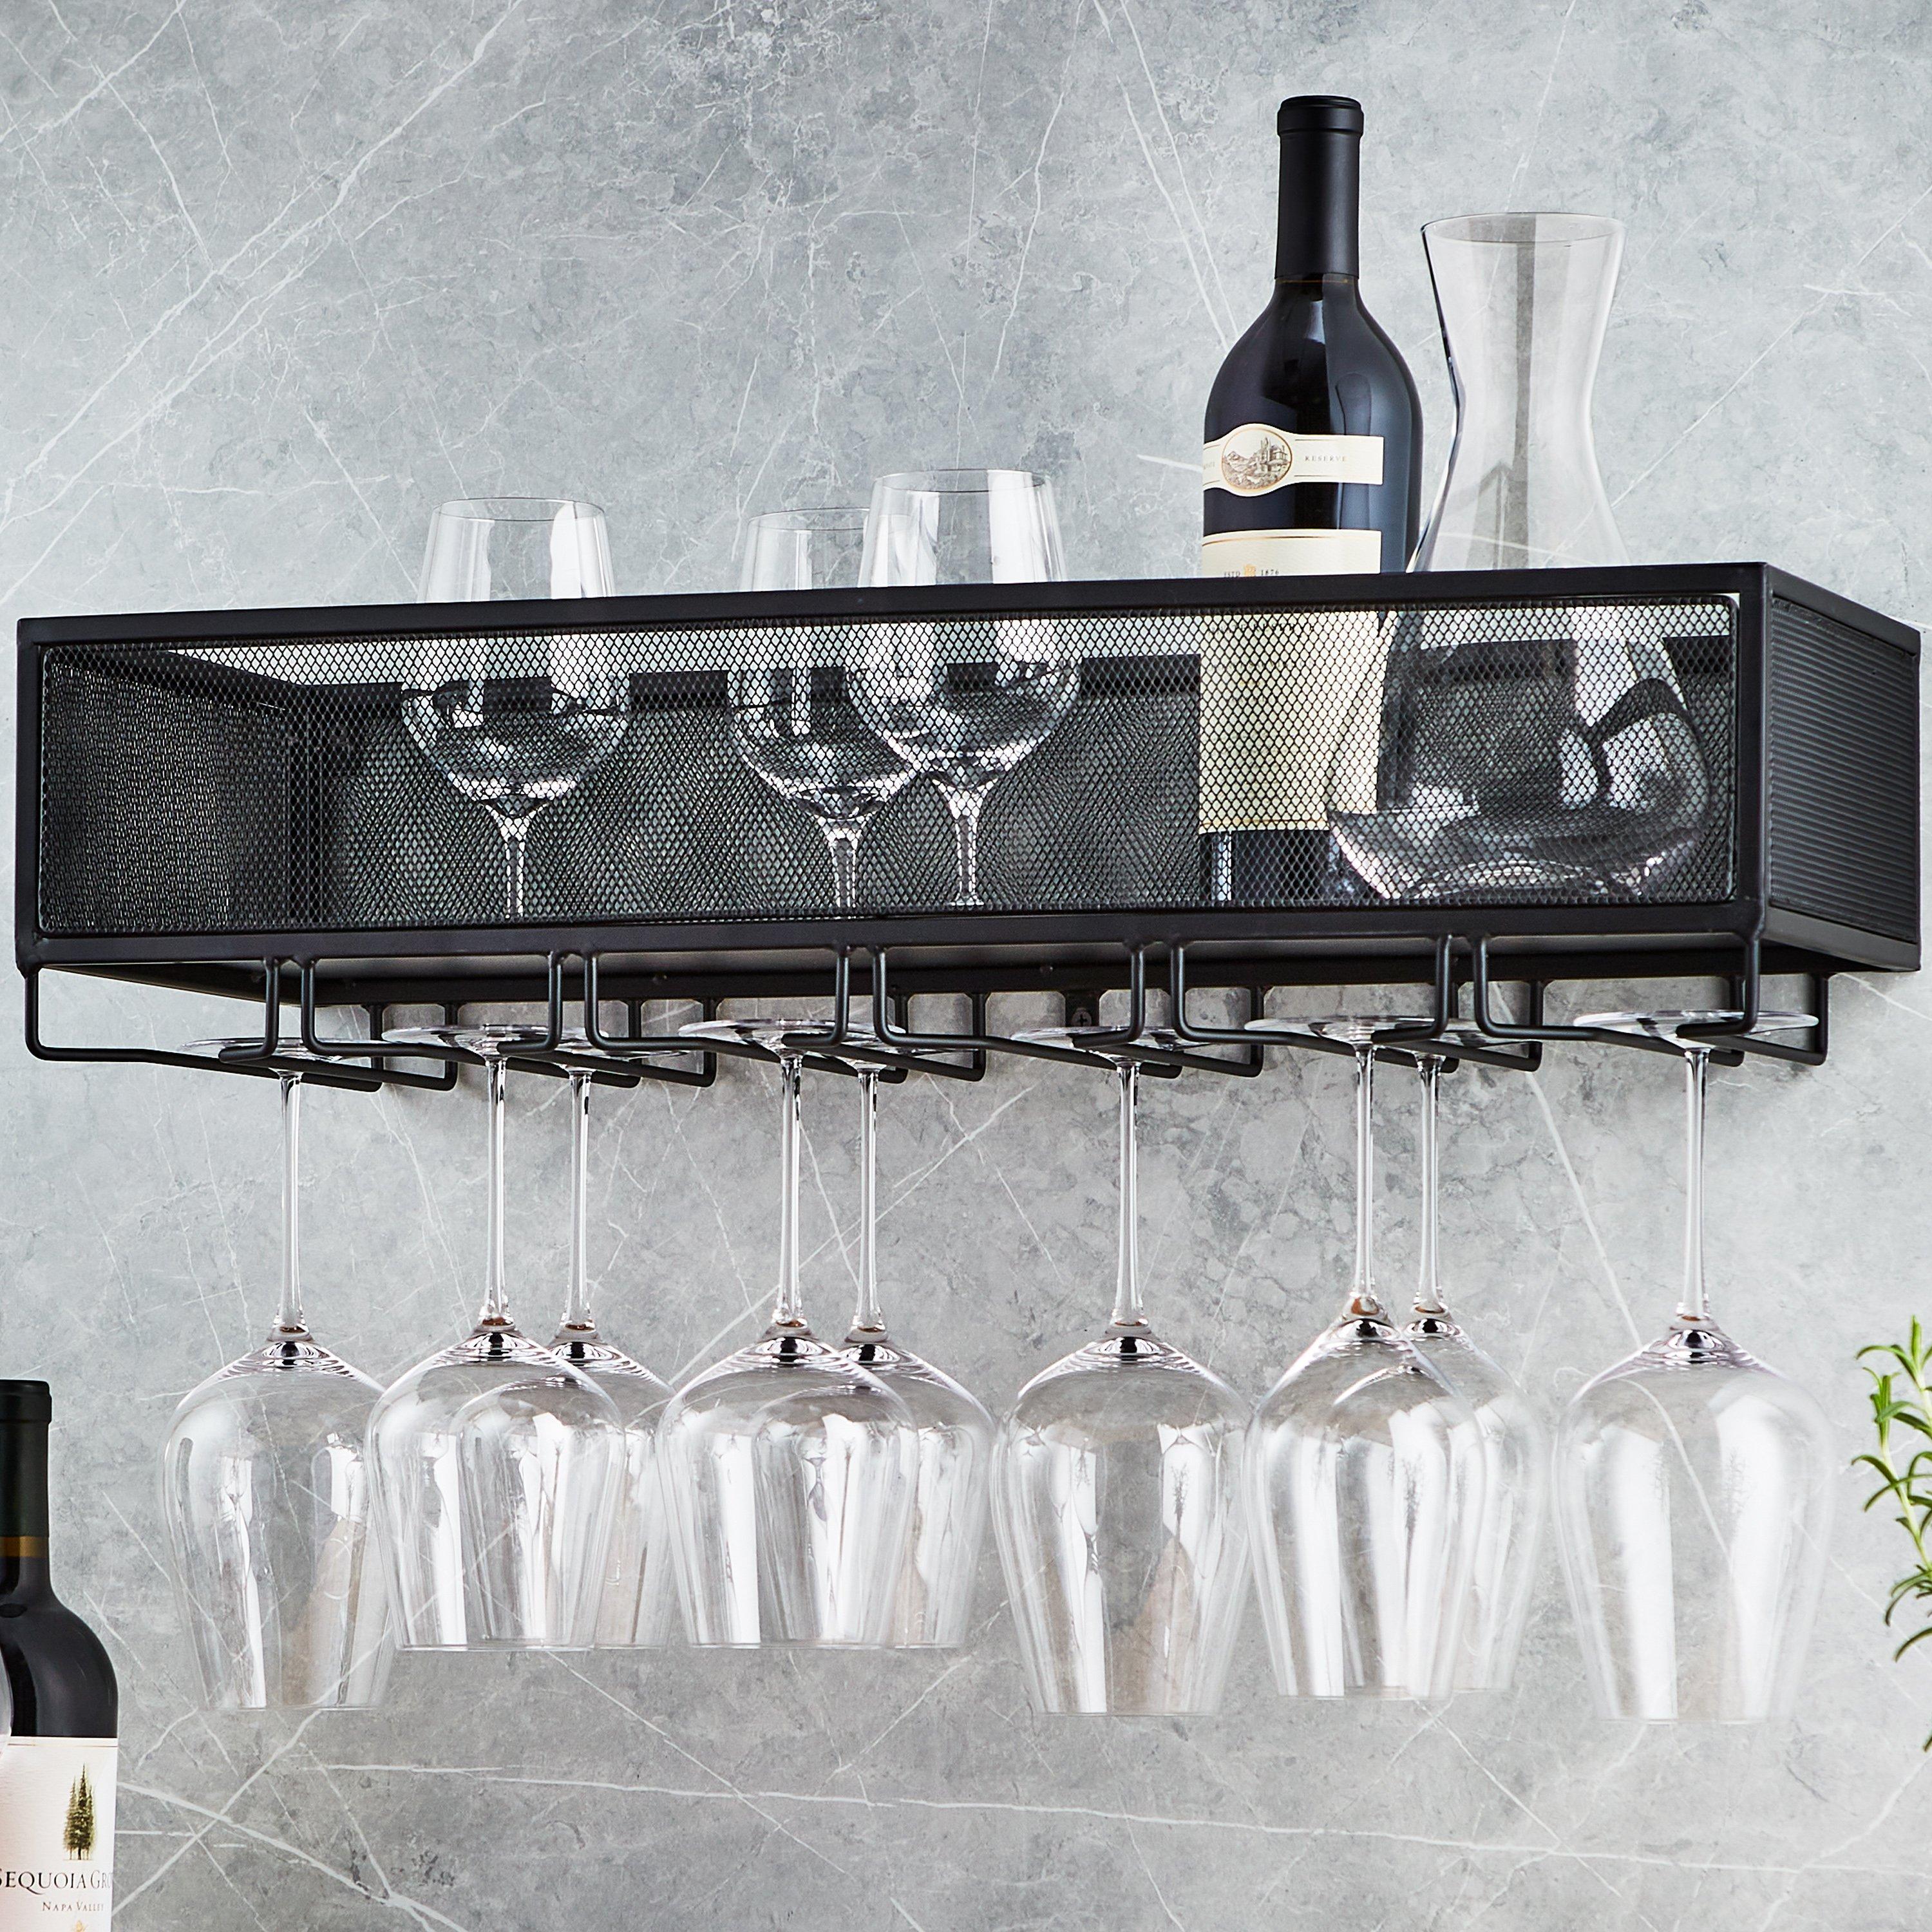 Wine Rack Holder Stainless Steel Hanging Racks Glass Cup Stemware Shelf Mounted